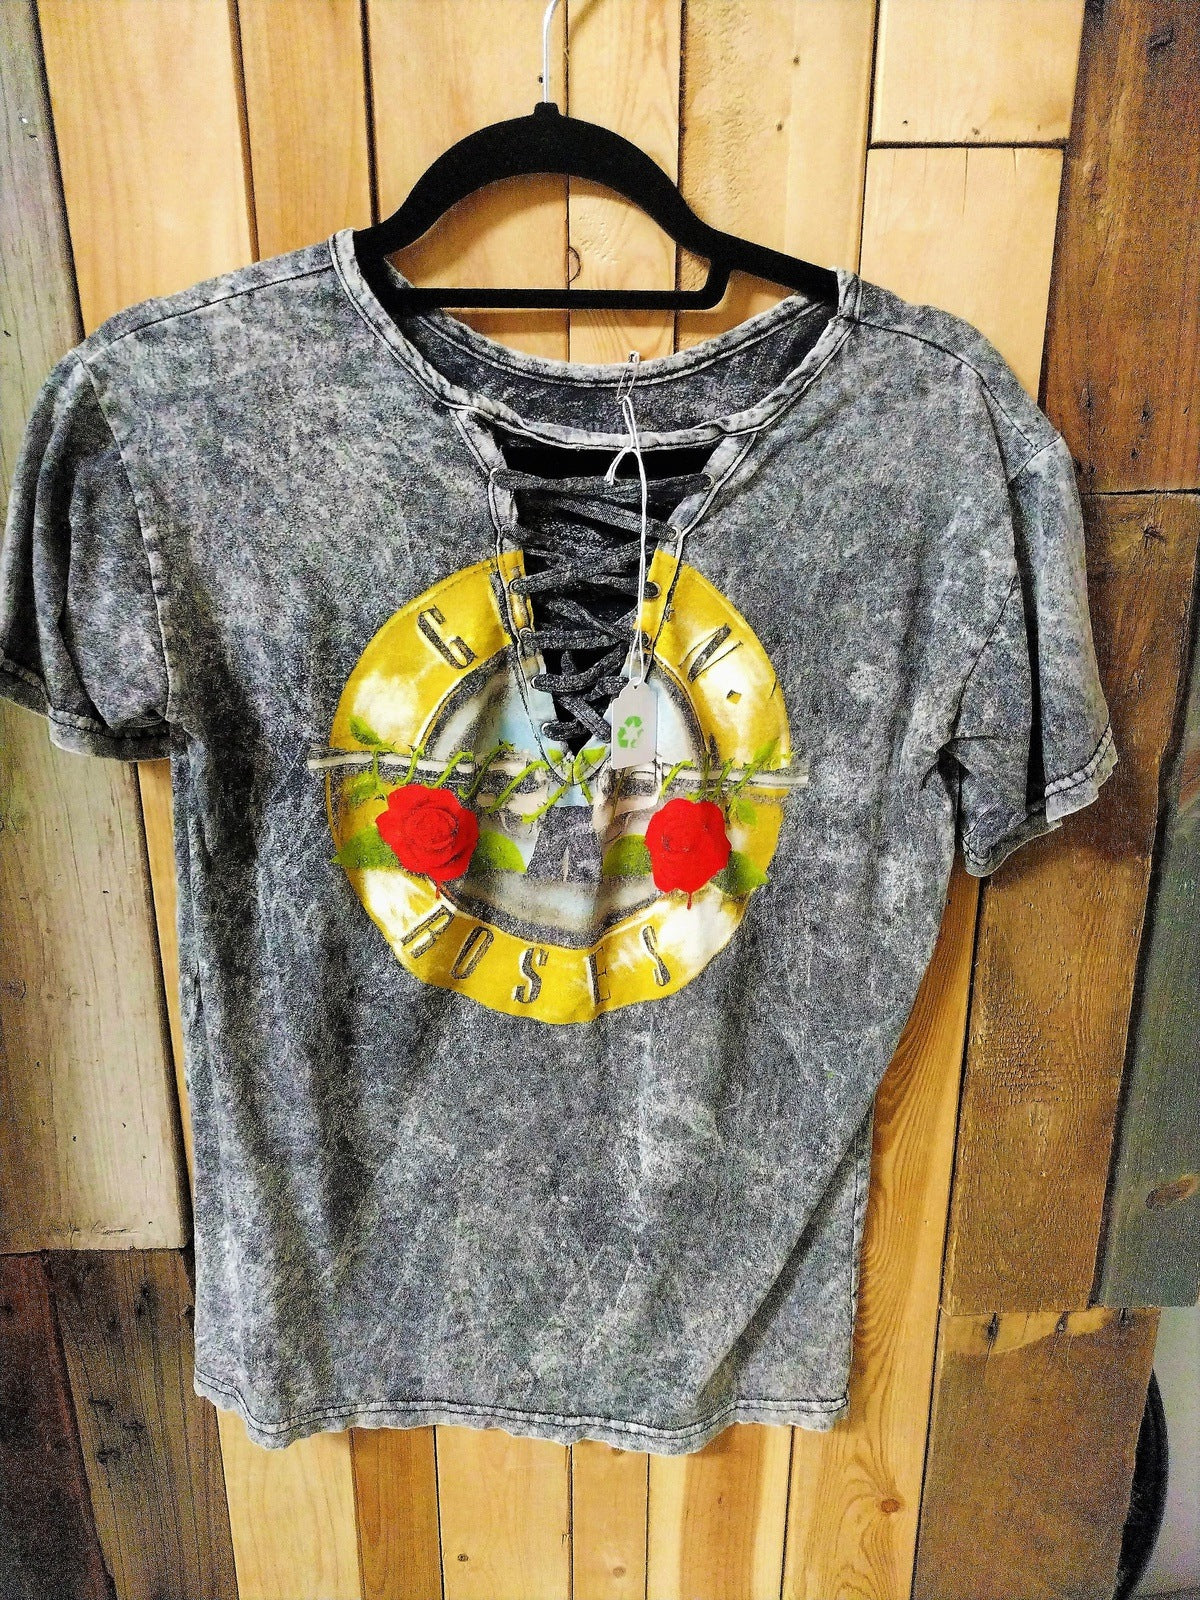 Guns N Roses Women's Size Medium Lace front Tee Shirt